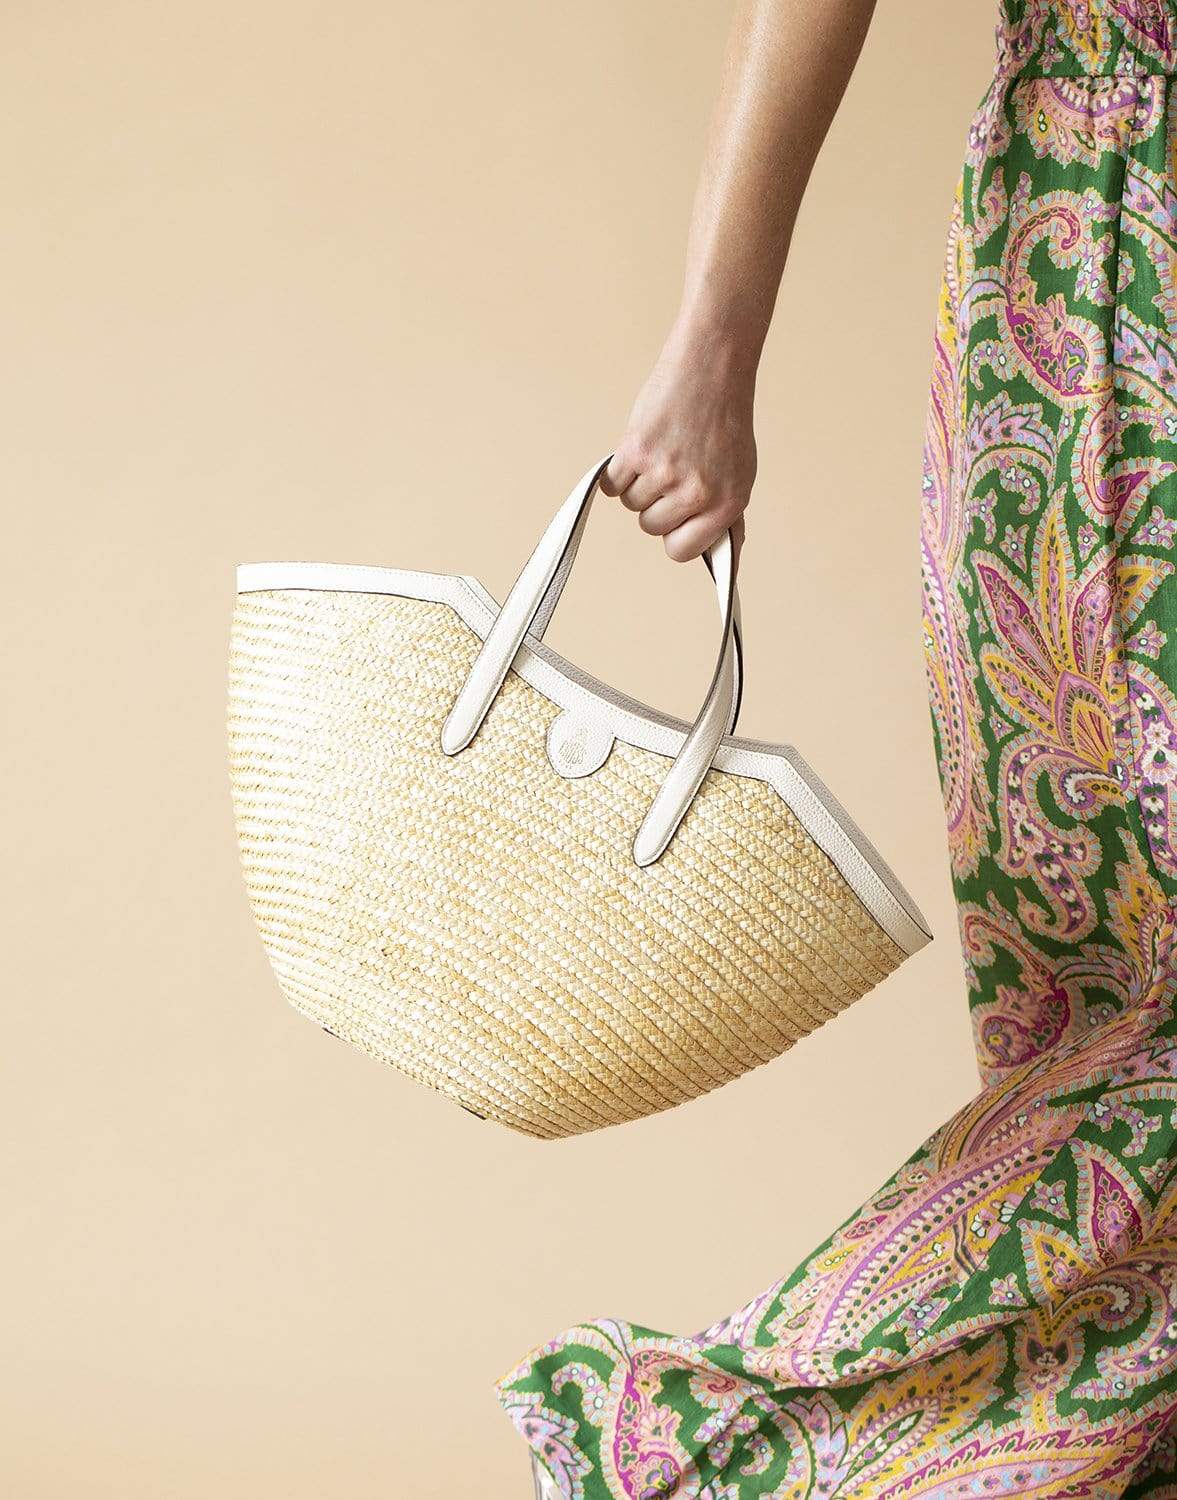 MARK CROSS-Madeline Straw & Leather Basket Bag-BONE